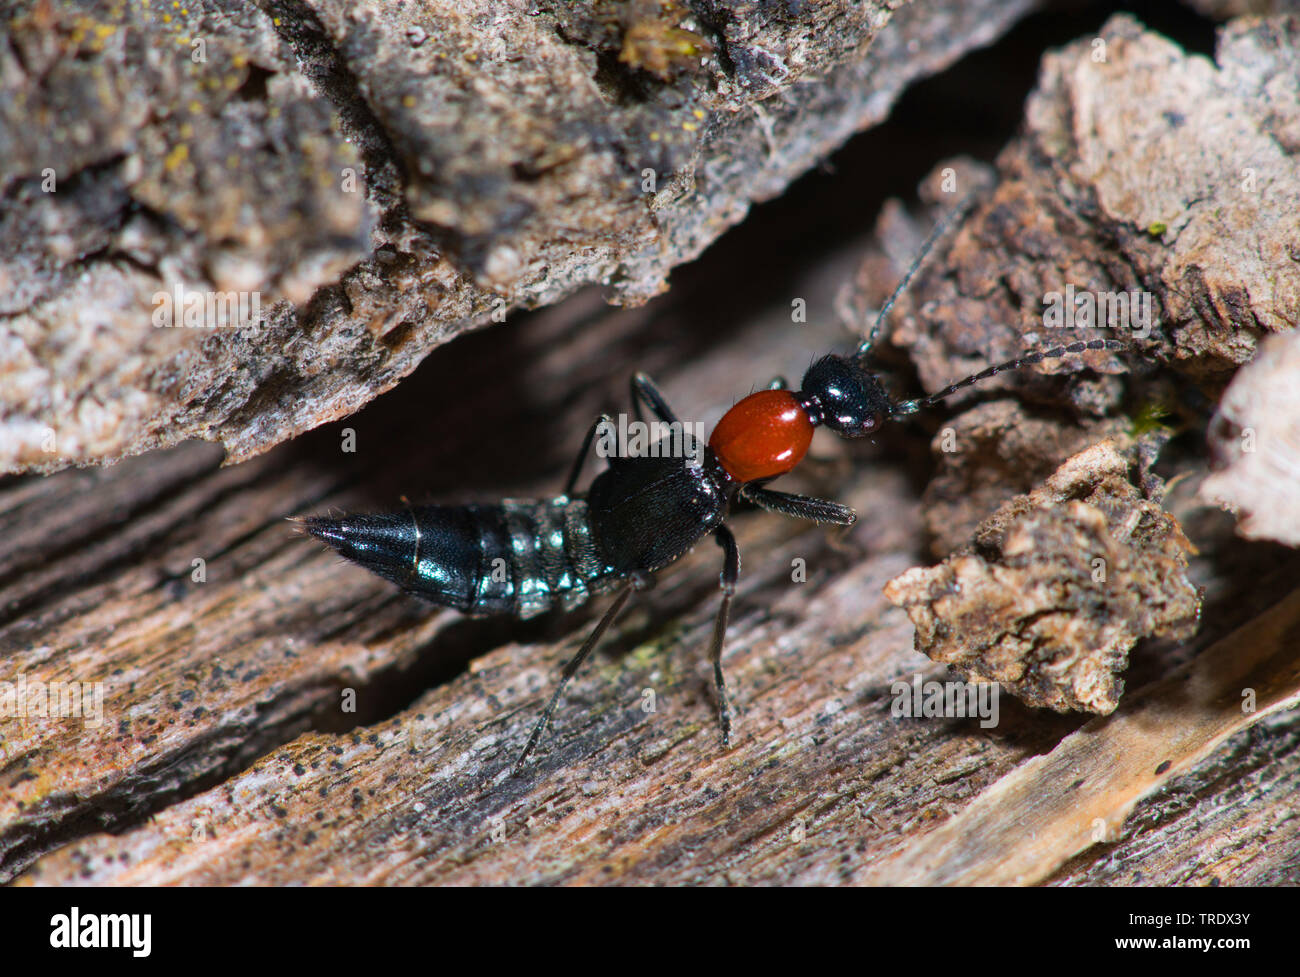 rove beetle (Paederus ruficollis, Paederidus ruficollis), lateral view, Germany Stock Photo